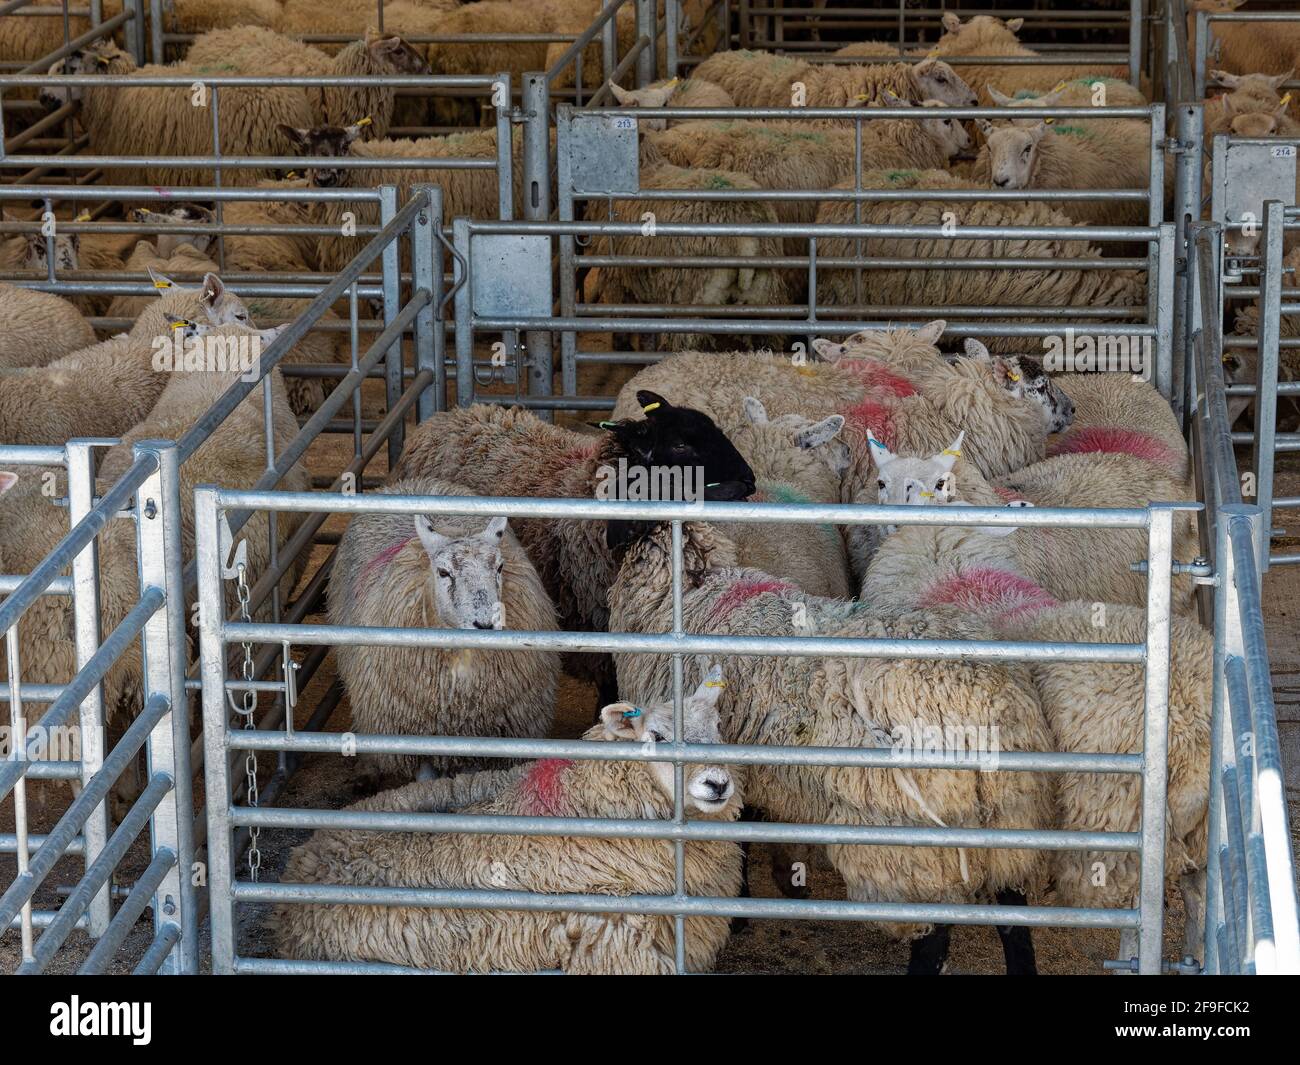 https://c8.alamy.com/comp/2F9FCK2/sheep-and-cattle-market-gisburn-yorkshire-uk-live-stock-in-pens-2F9FCK2.jpg